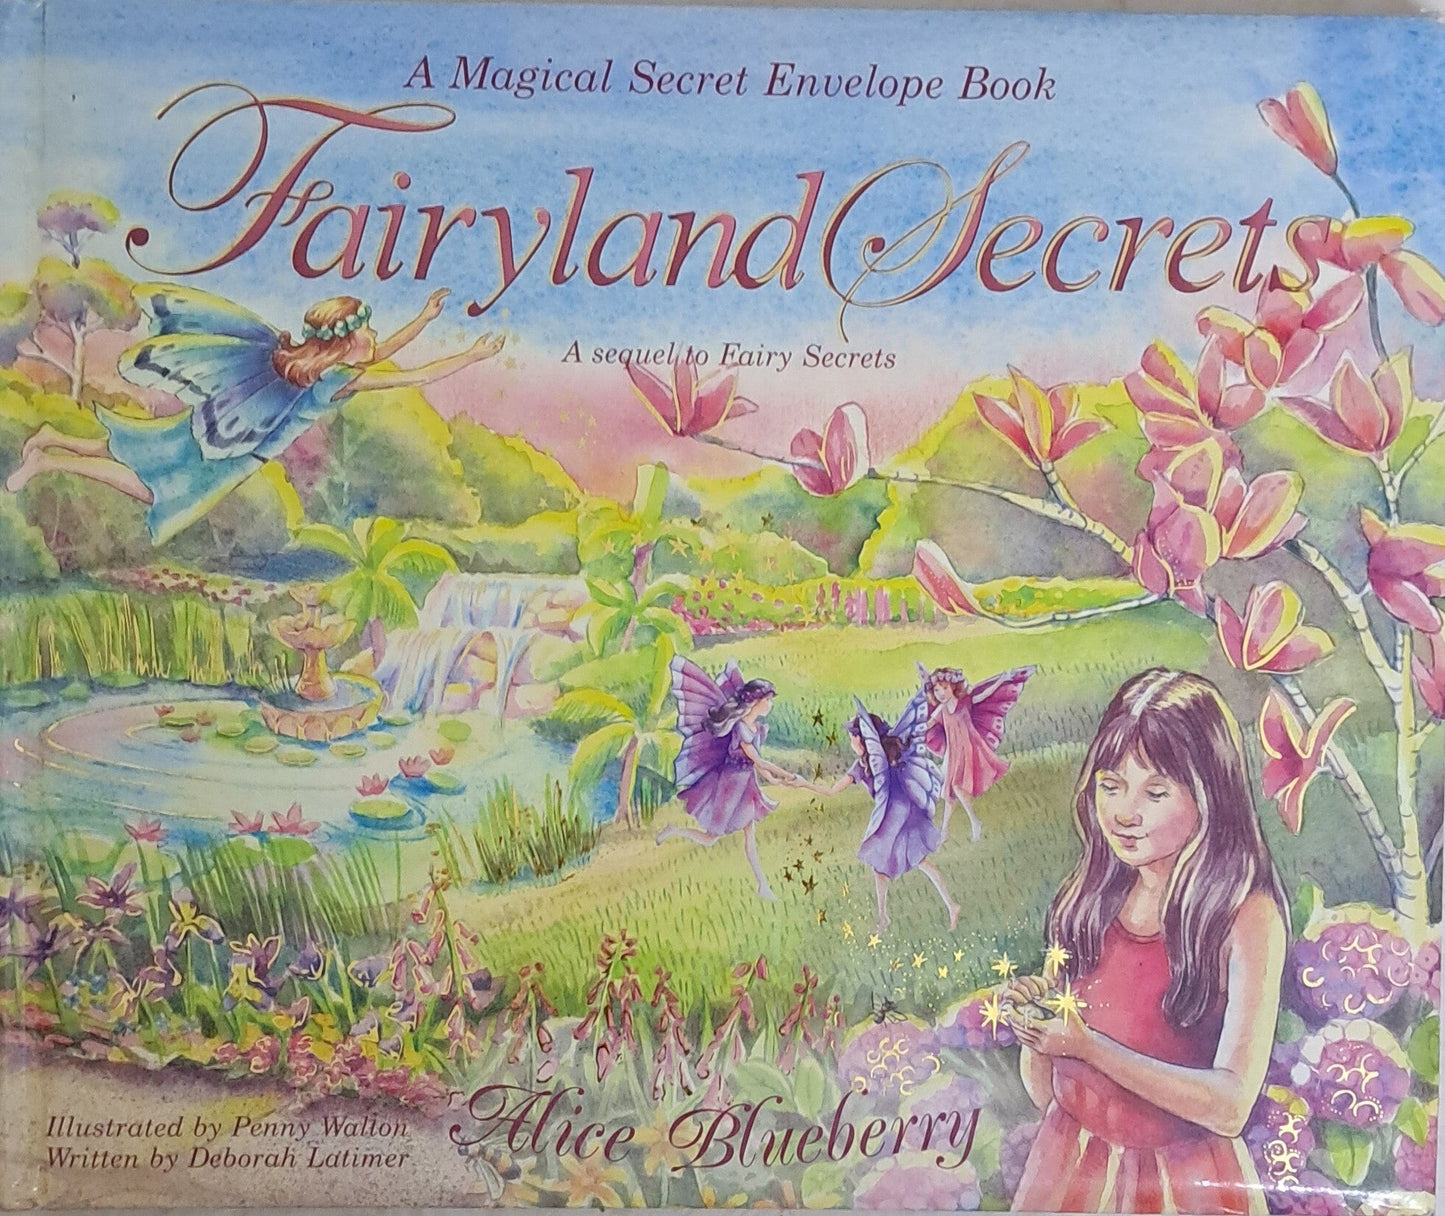 Fairy land secrets (sequel to fairy secrets) | Hardcover